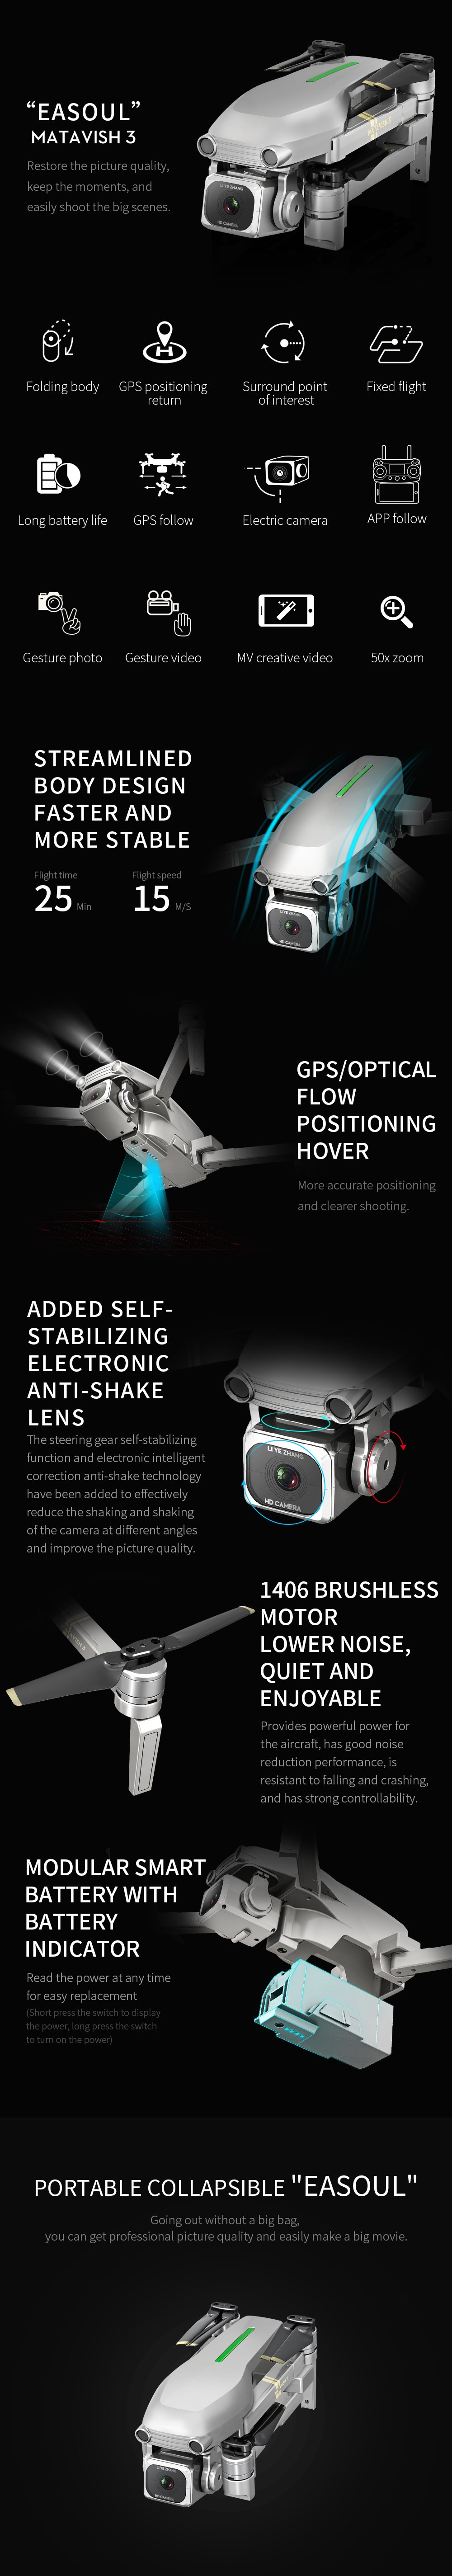 L109-S MATAVISH3 5G Anti-shake Aerial Drone With 4K 1080P HD Camera 50X Zoom GPS Foldable Brushless RC Quadcopter 14